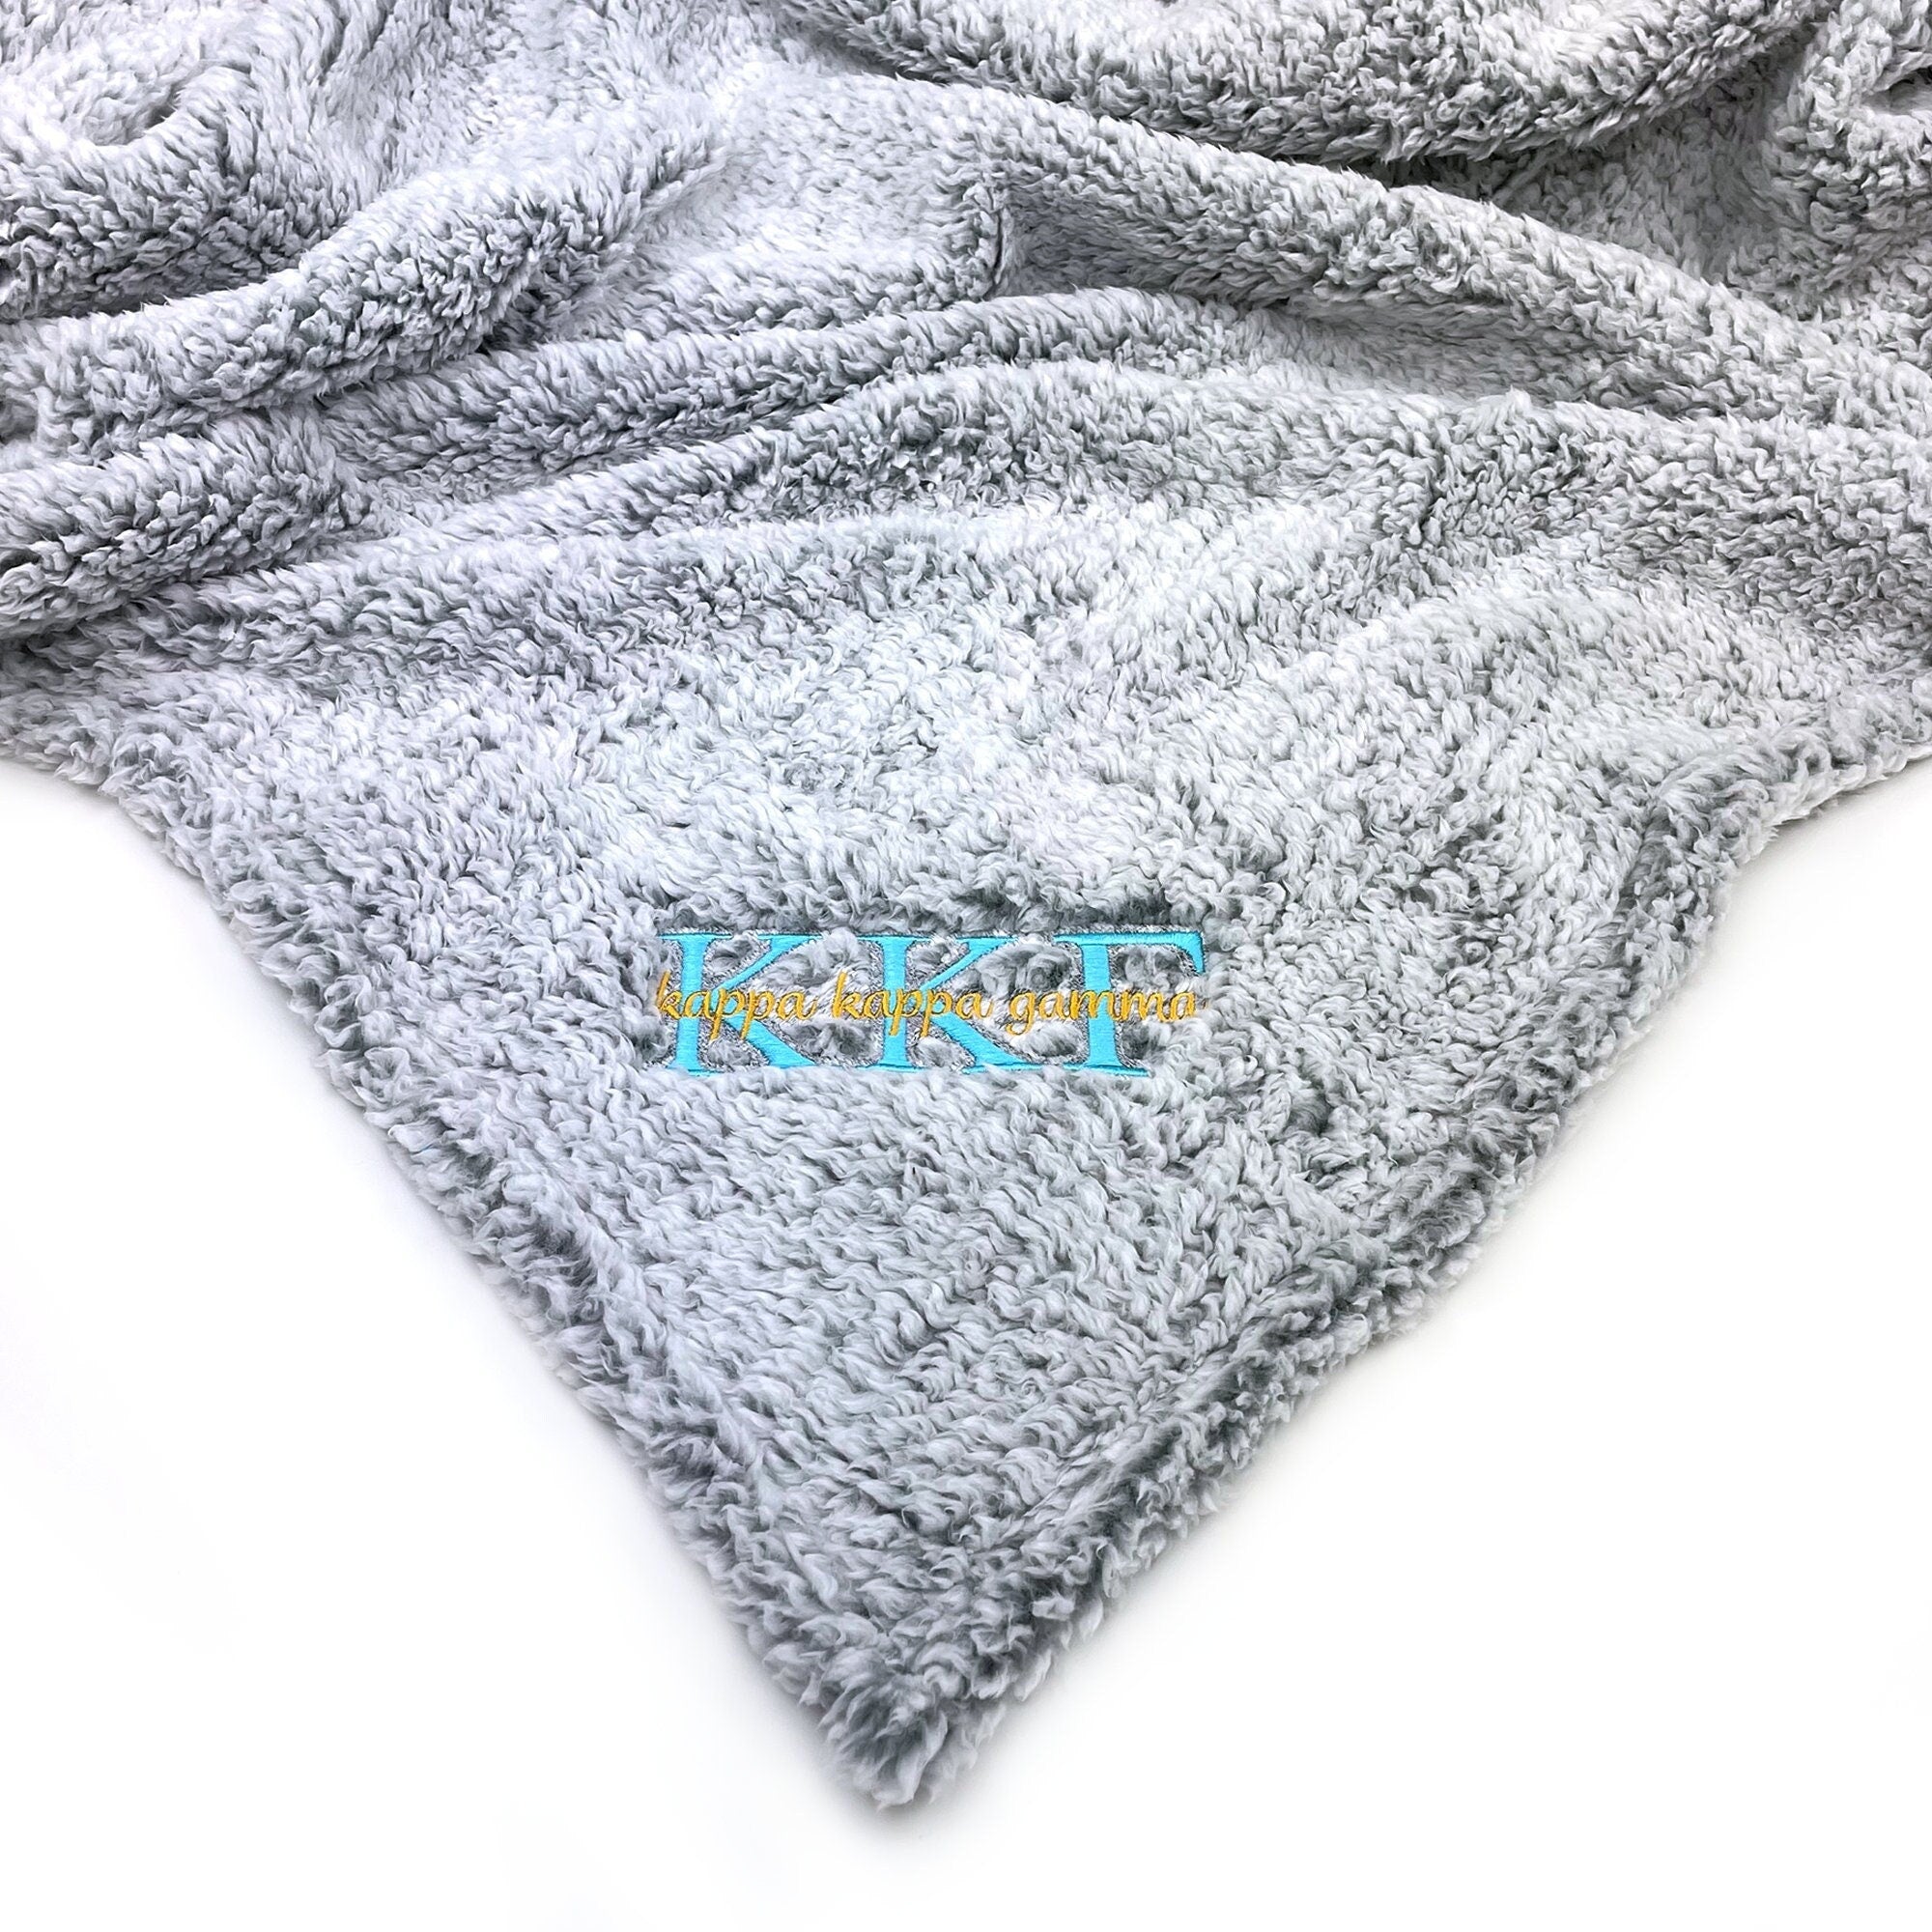 Kappa Kappa Gamma Fuzzy Sherpa Blanket - Go Greek Chic